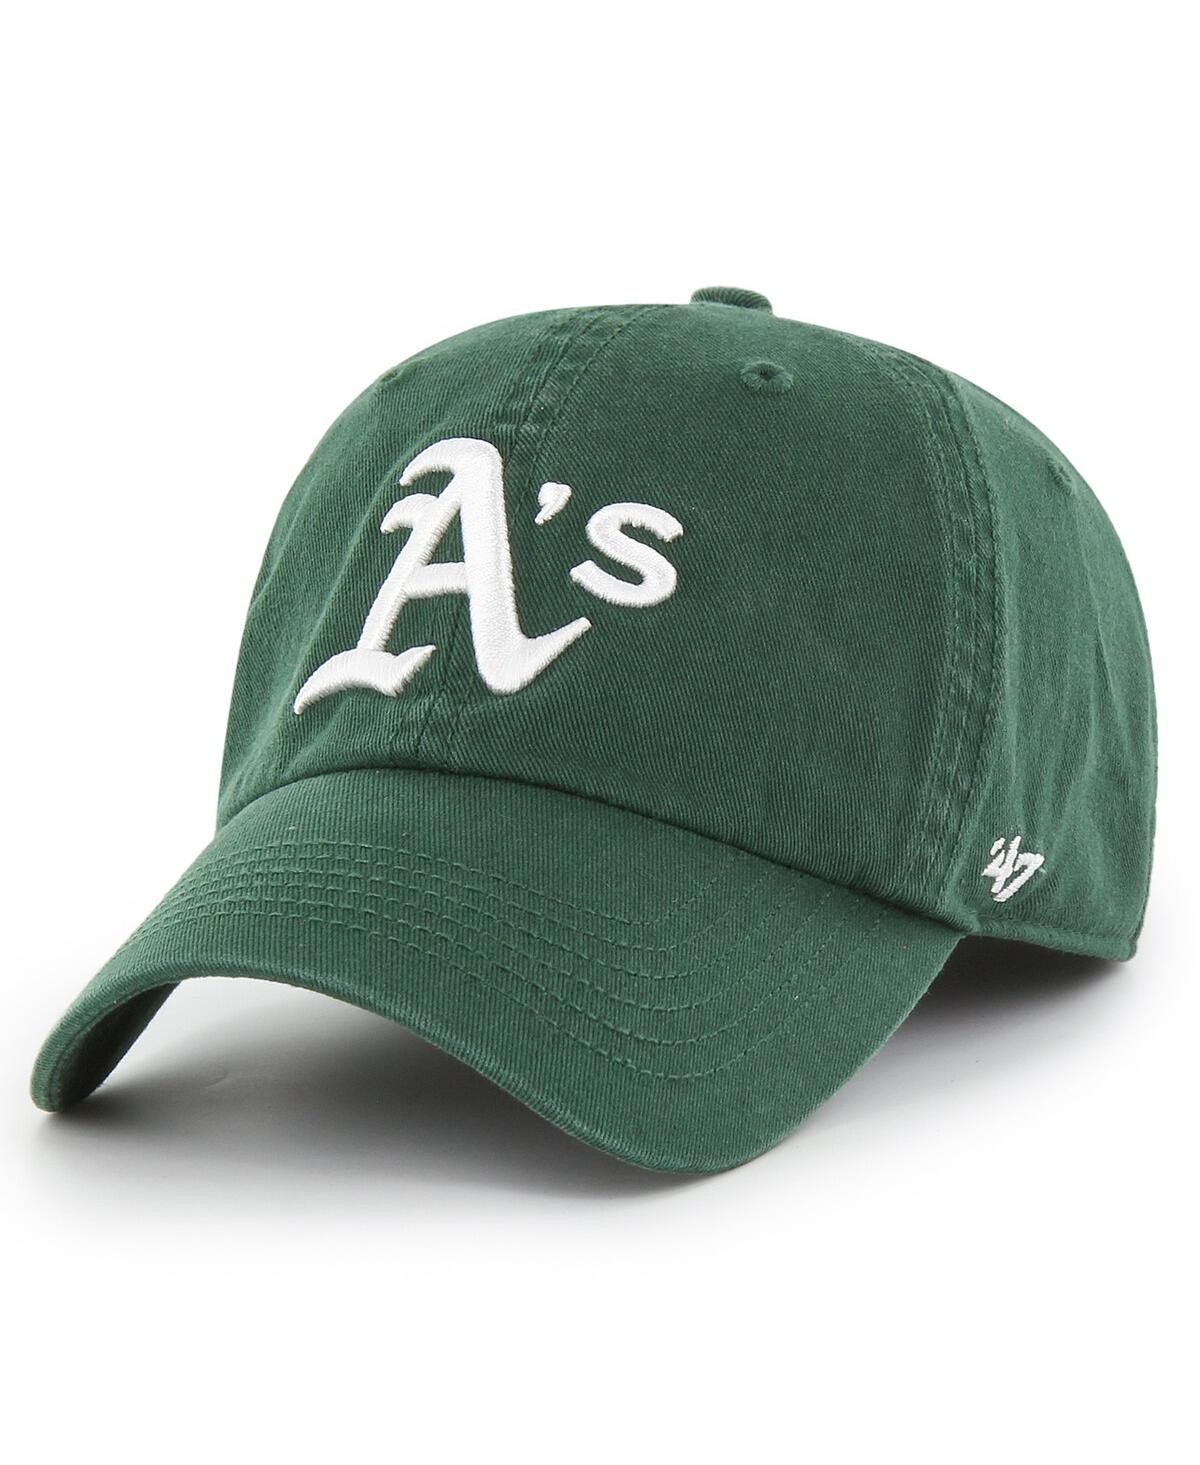 Men's '47 Brand Green Oakland Athletics Franchise Logo Fitted Hat - Green